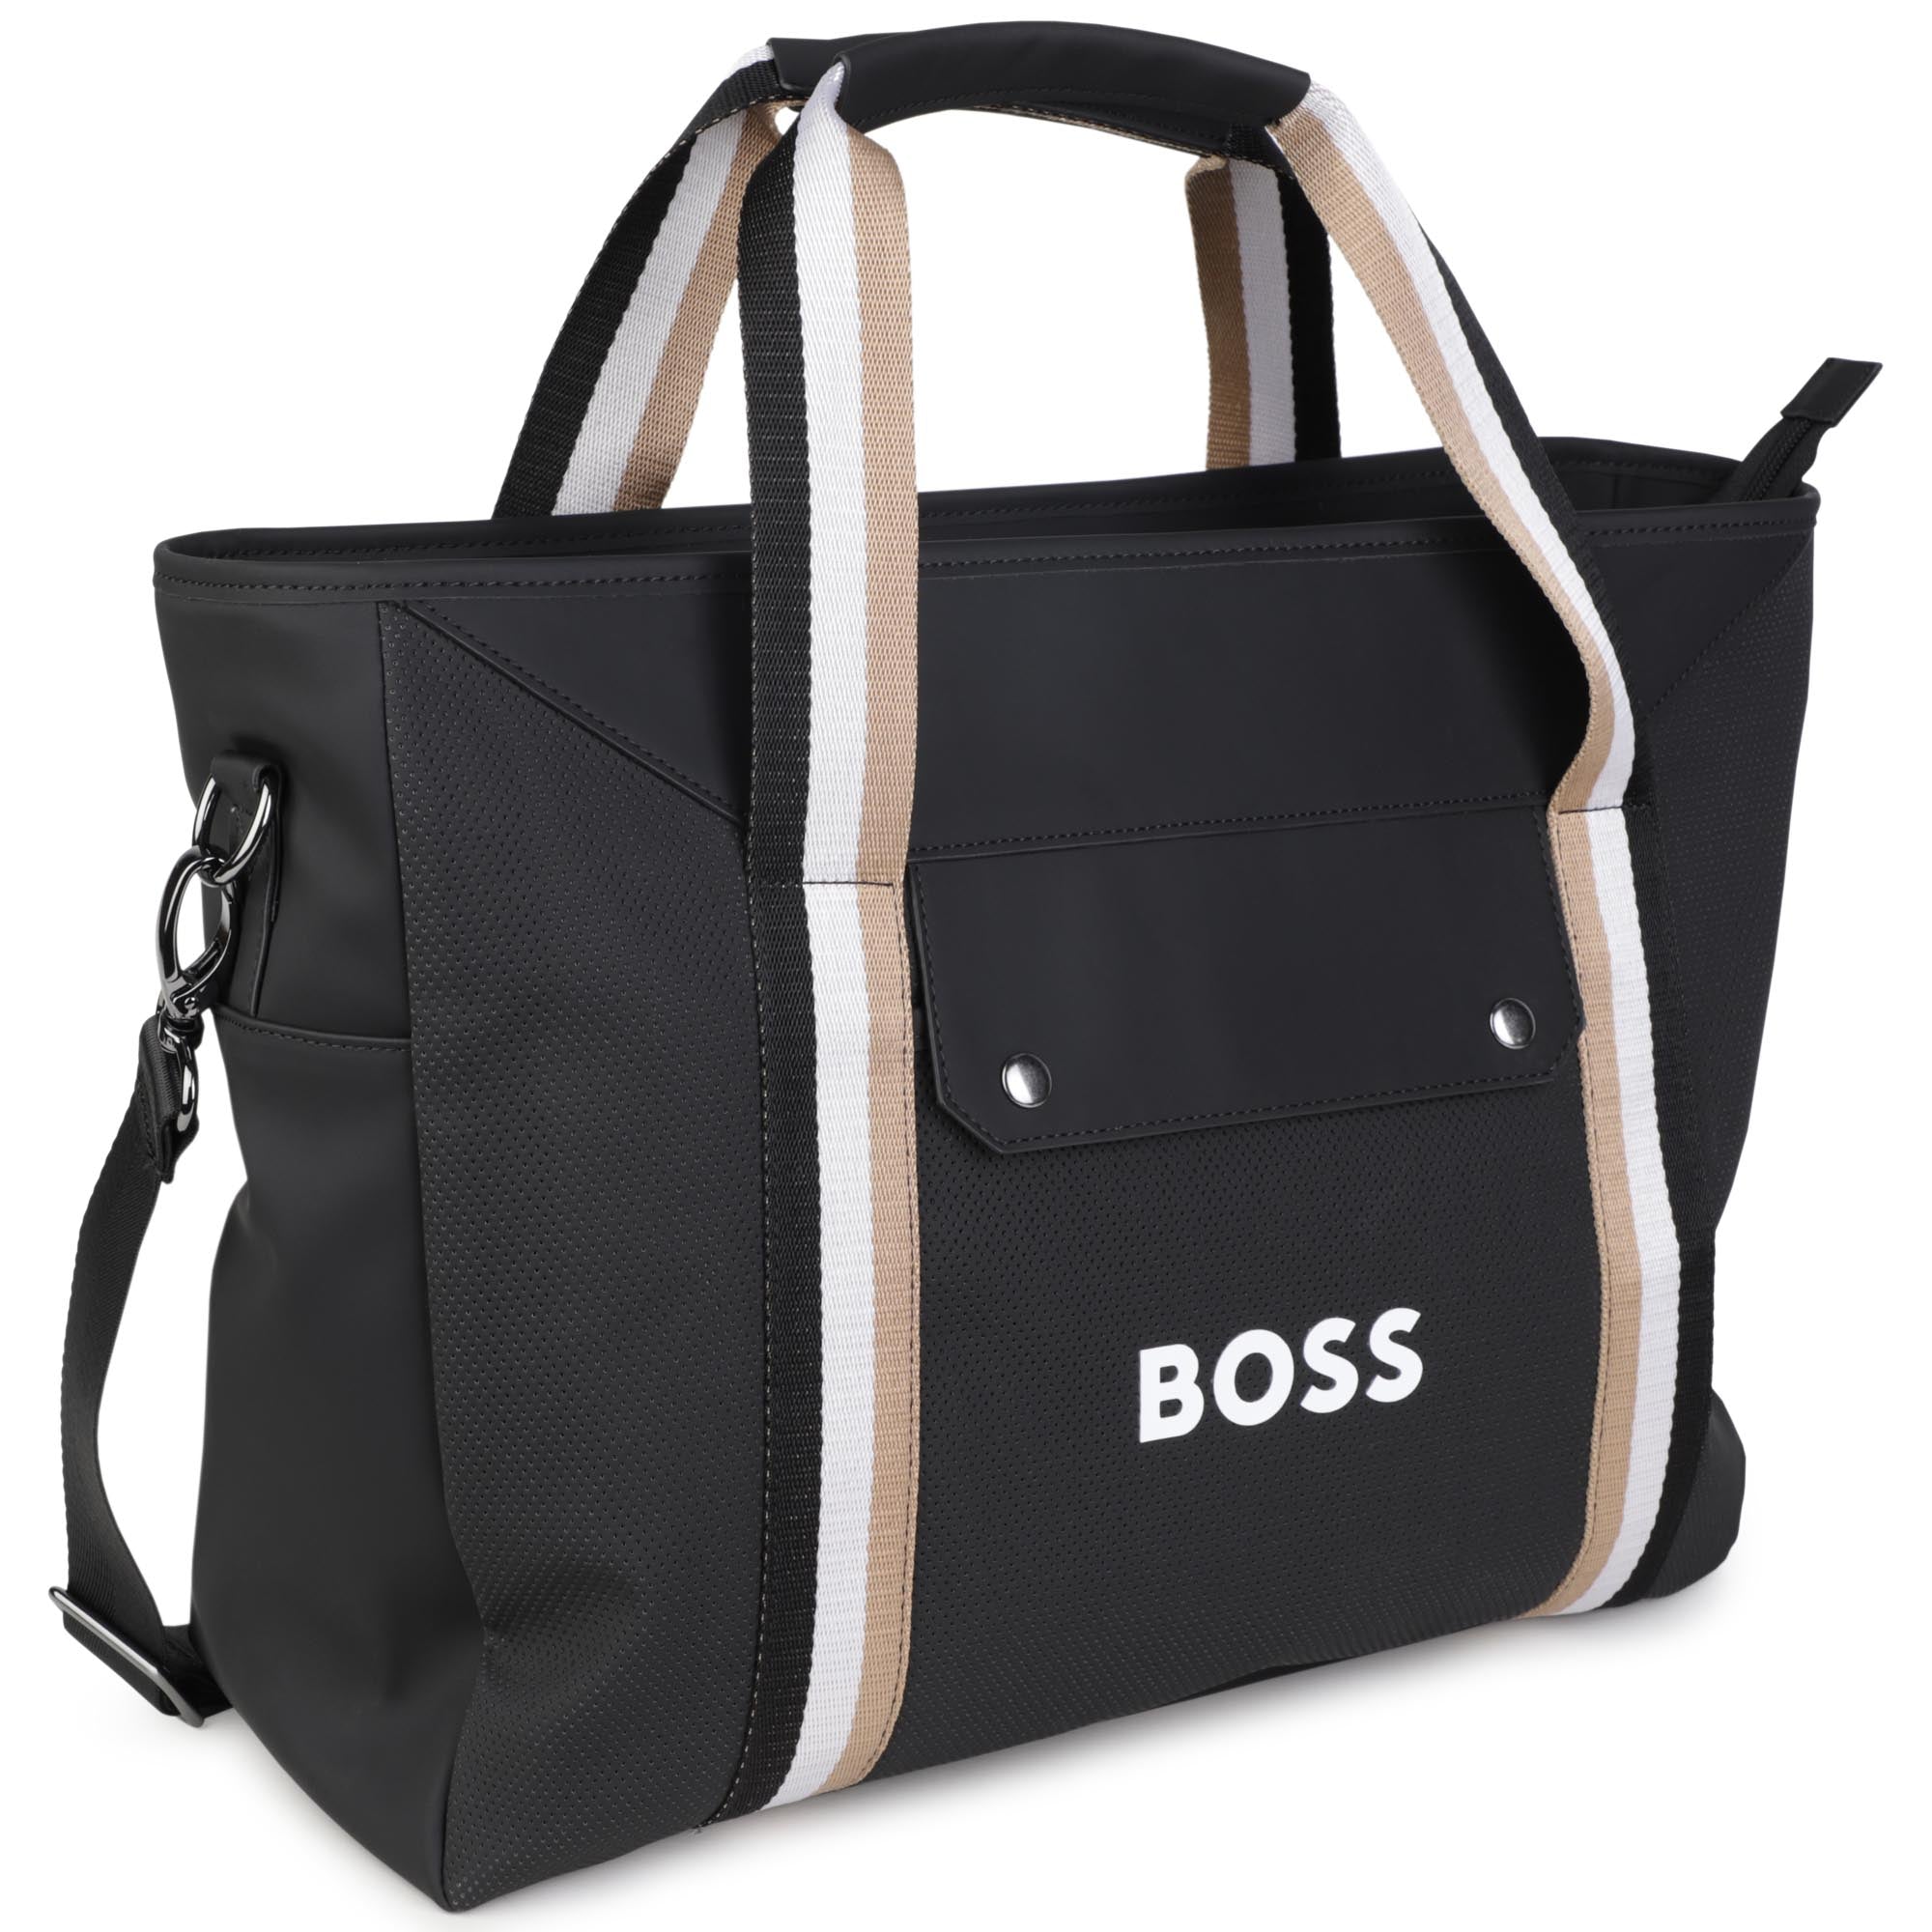 Hugo Boss Black Diaper Bag